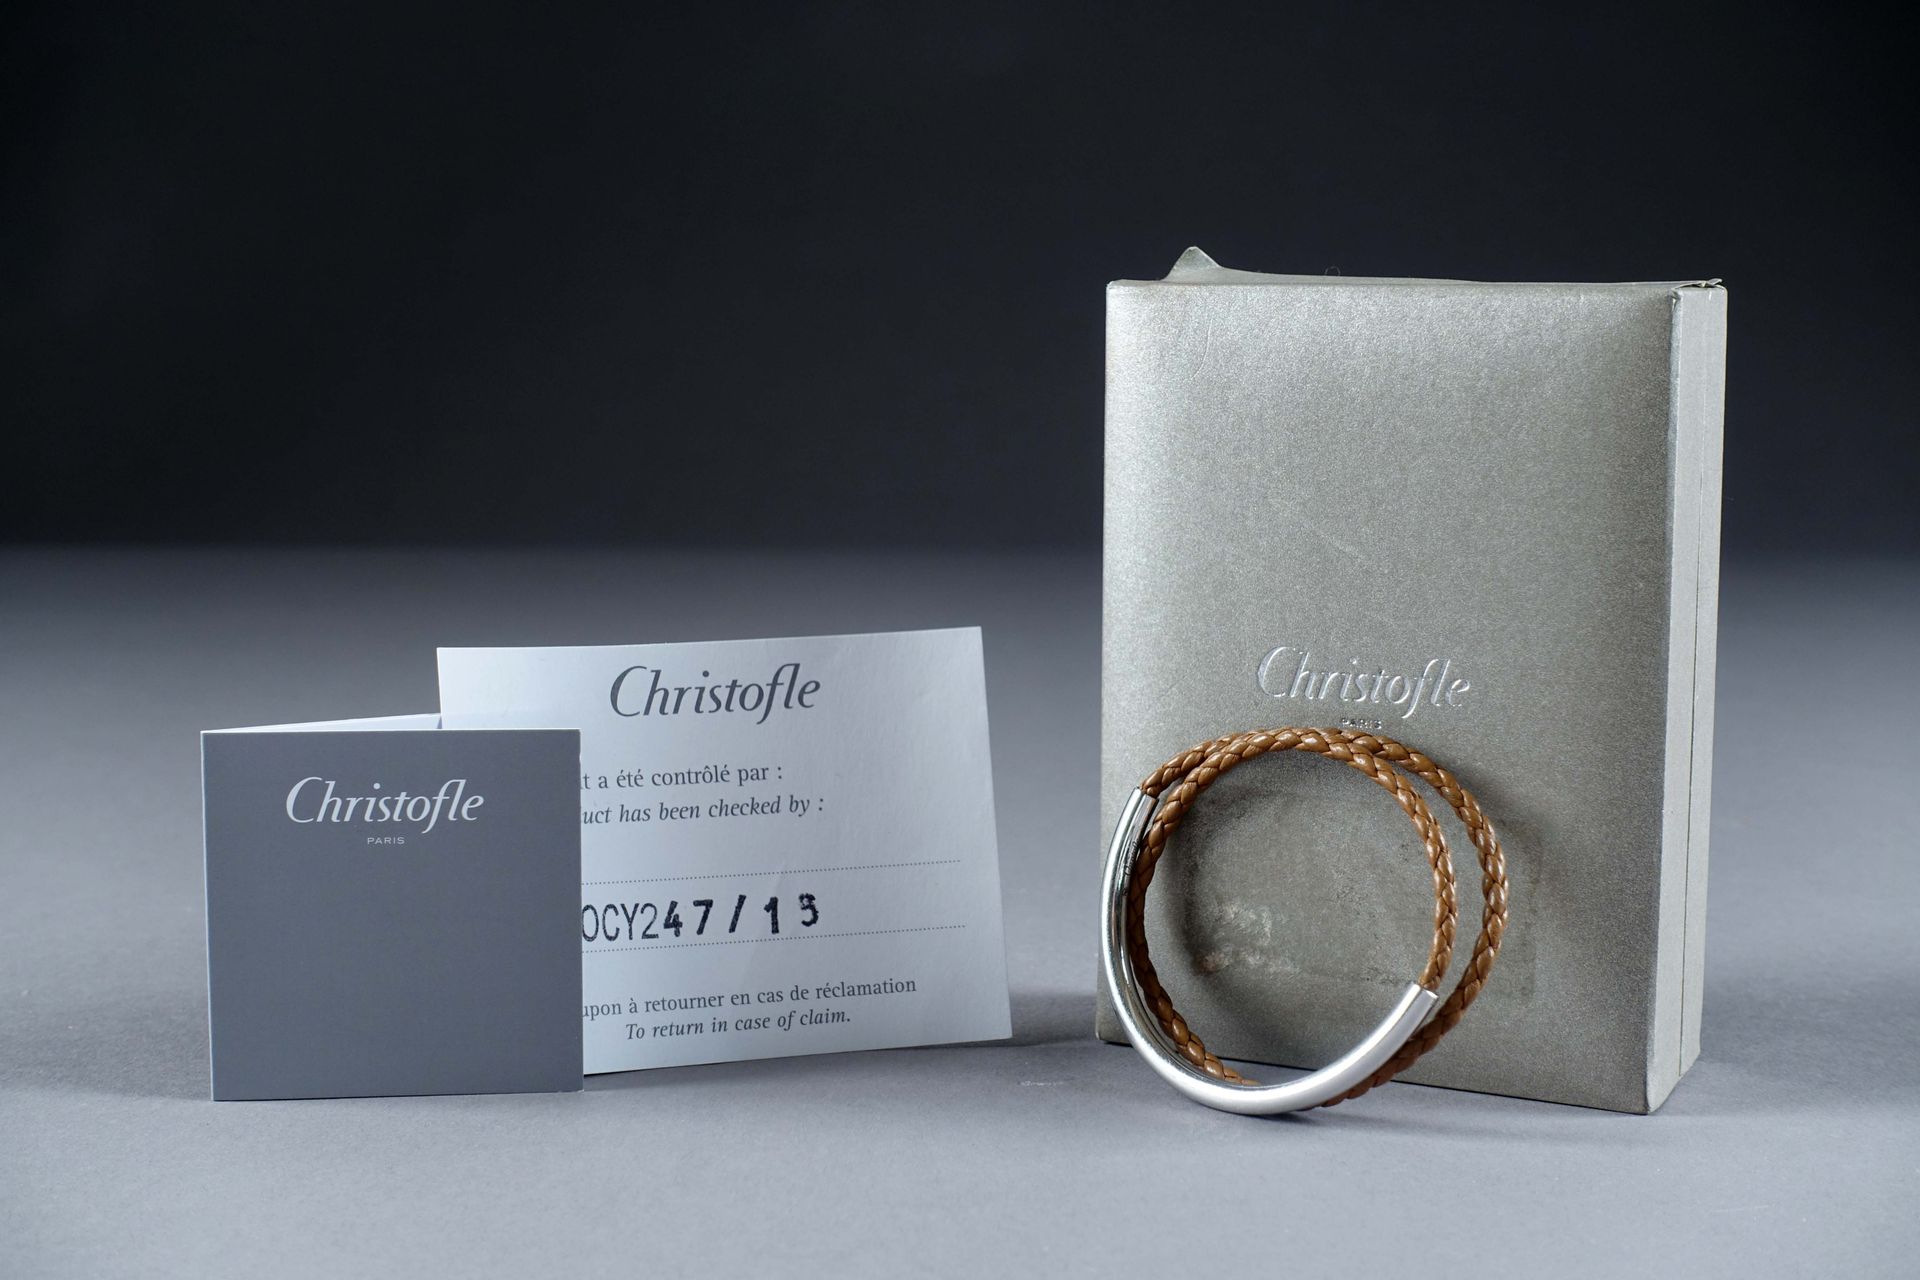 Christofle - Paris. 焦糖色皮革和银950/000的Duo Complice手镯。有箱子和文件。